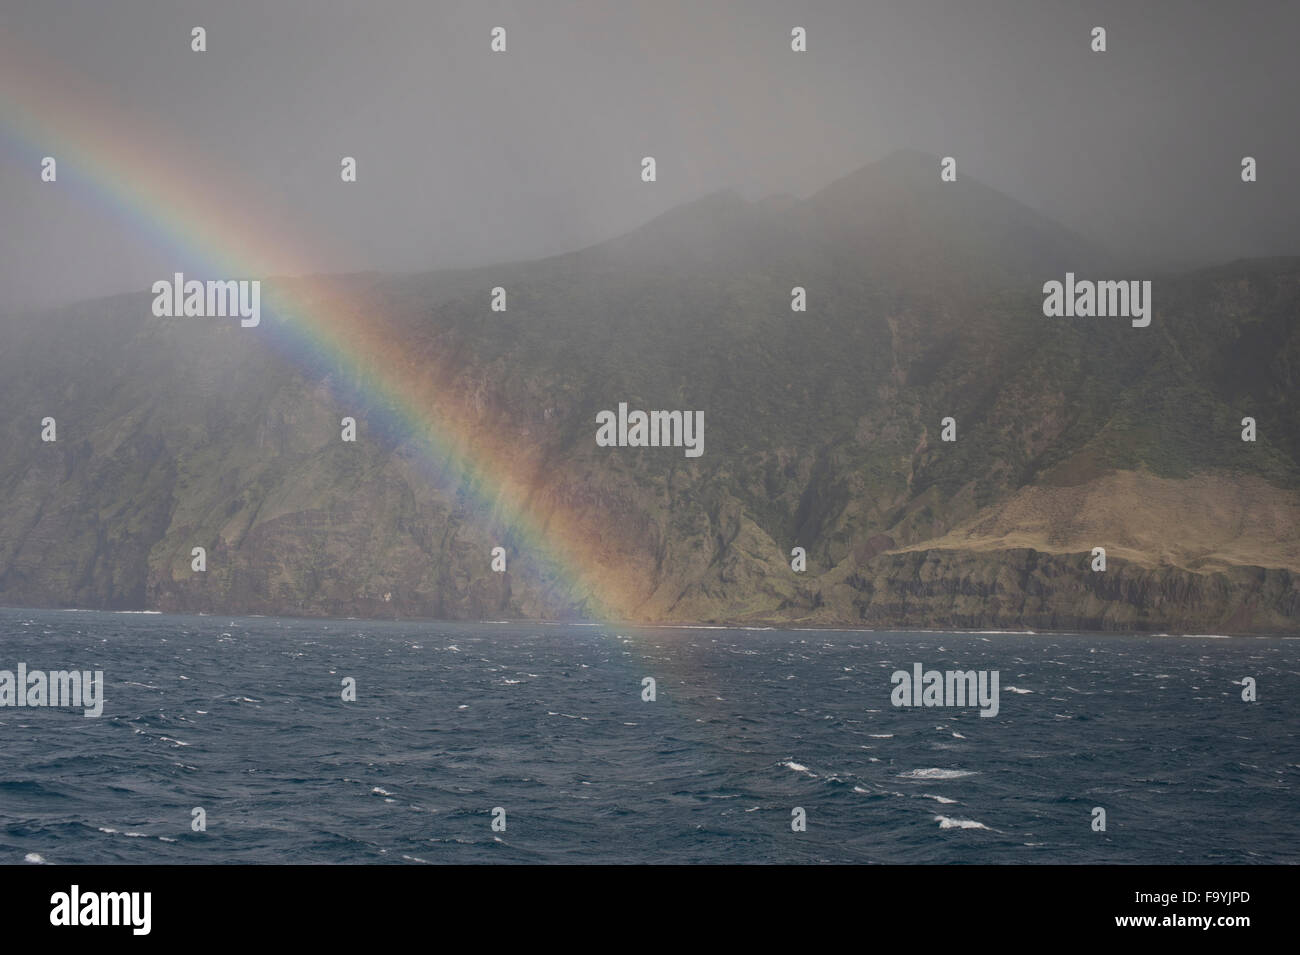 Double Rainbow at Island of Saint Helena, South Atlantic Ocean Stock Photo